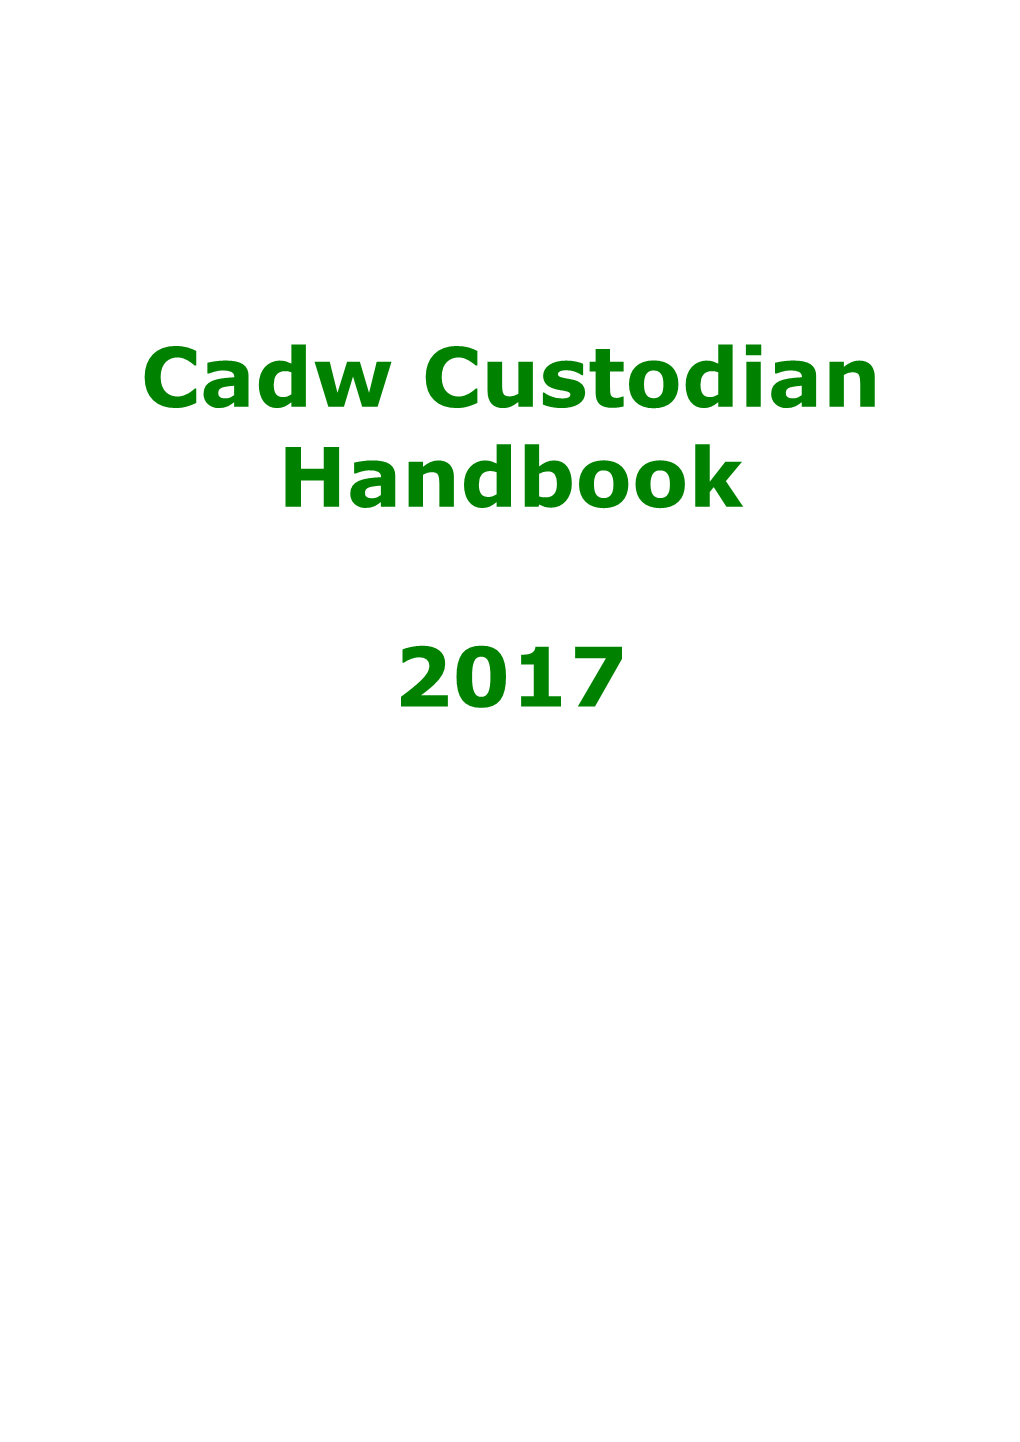 Cadw Custodian Handbook 2017